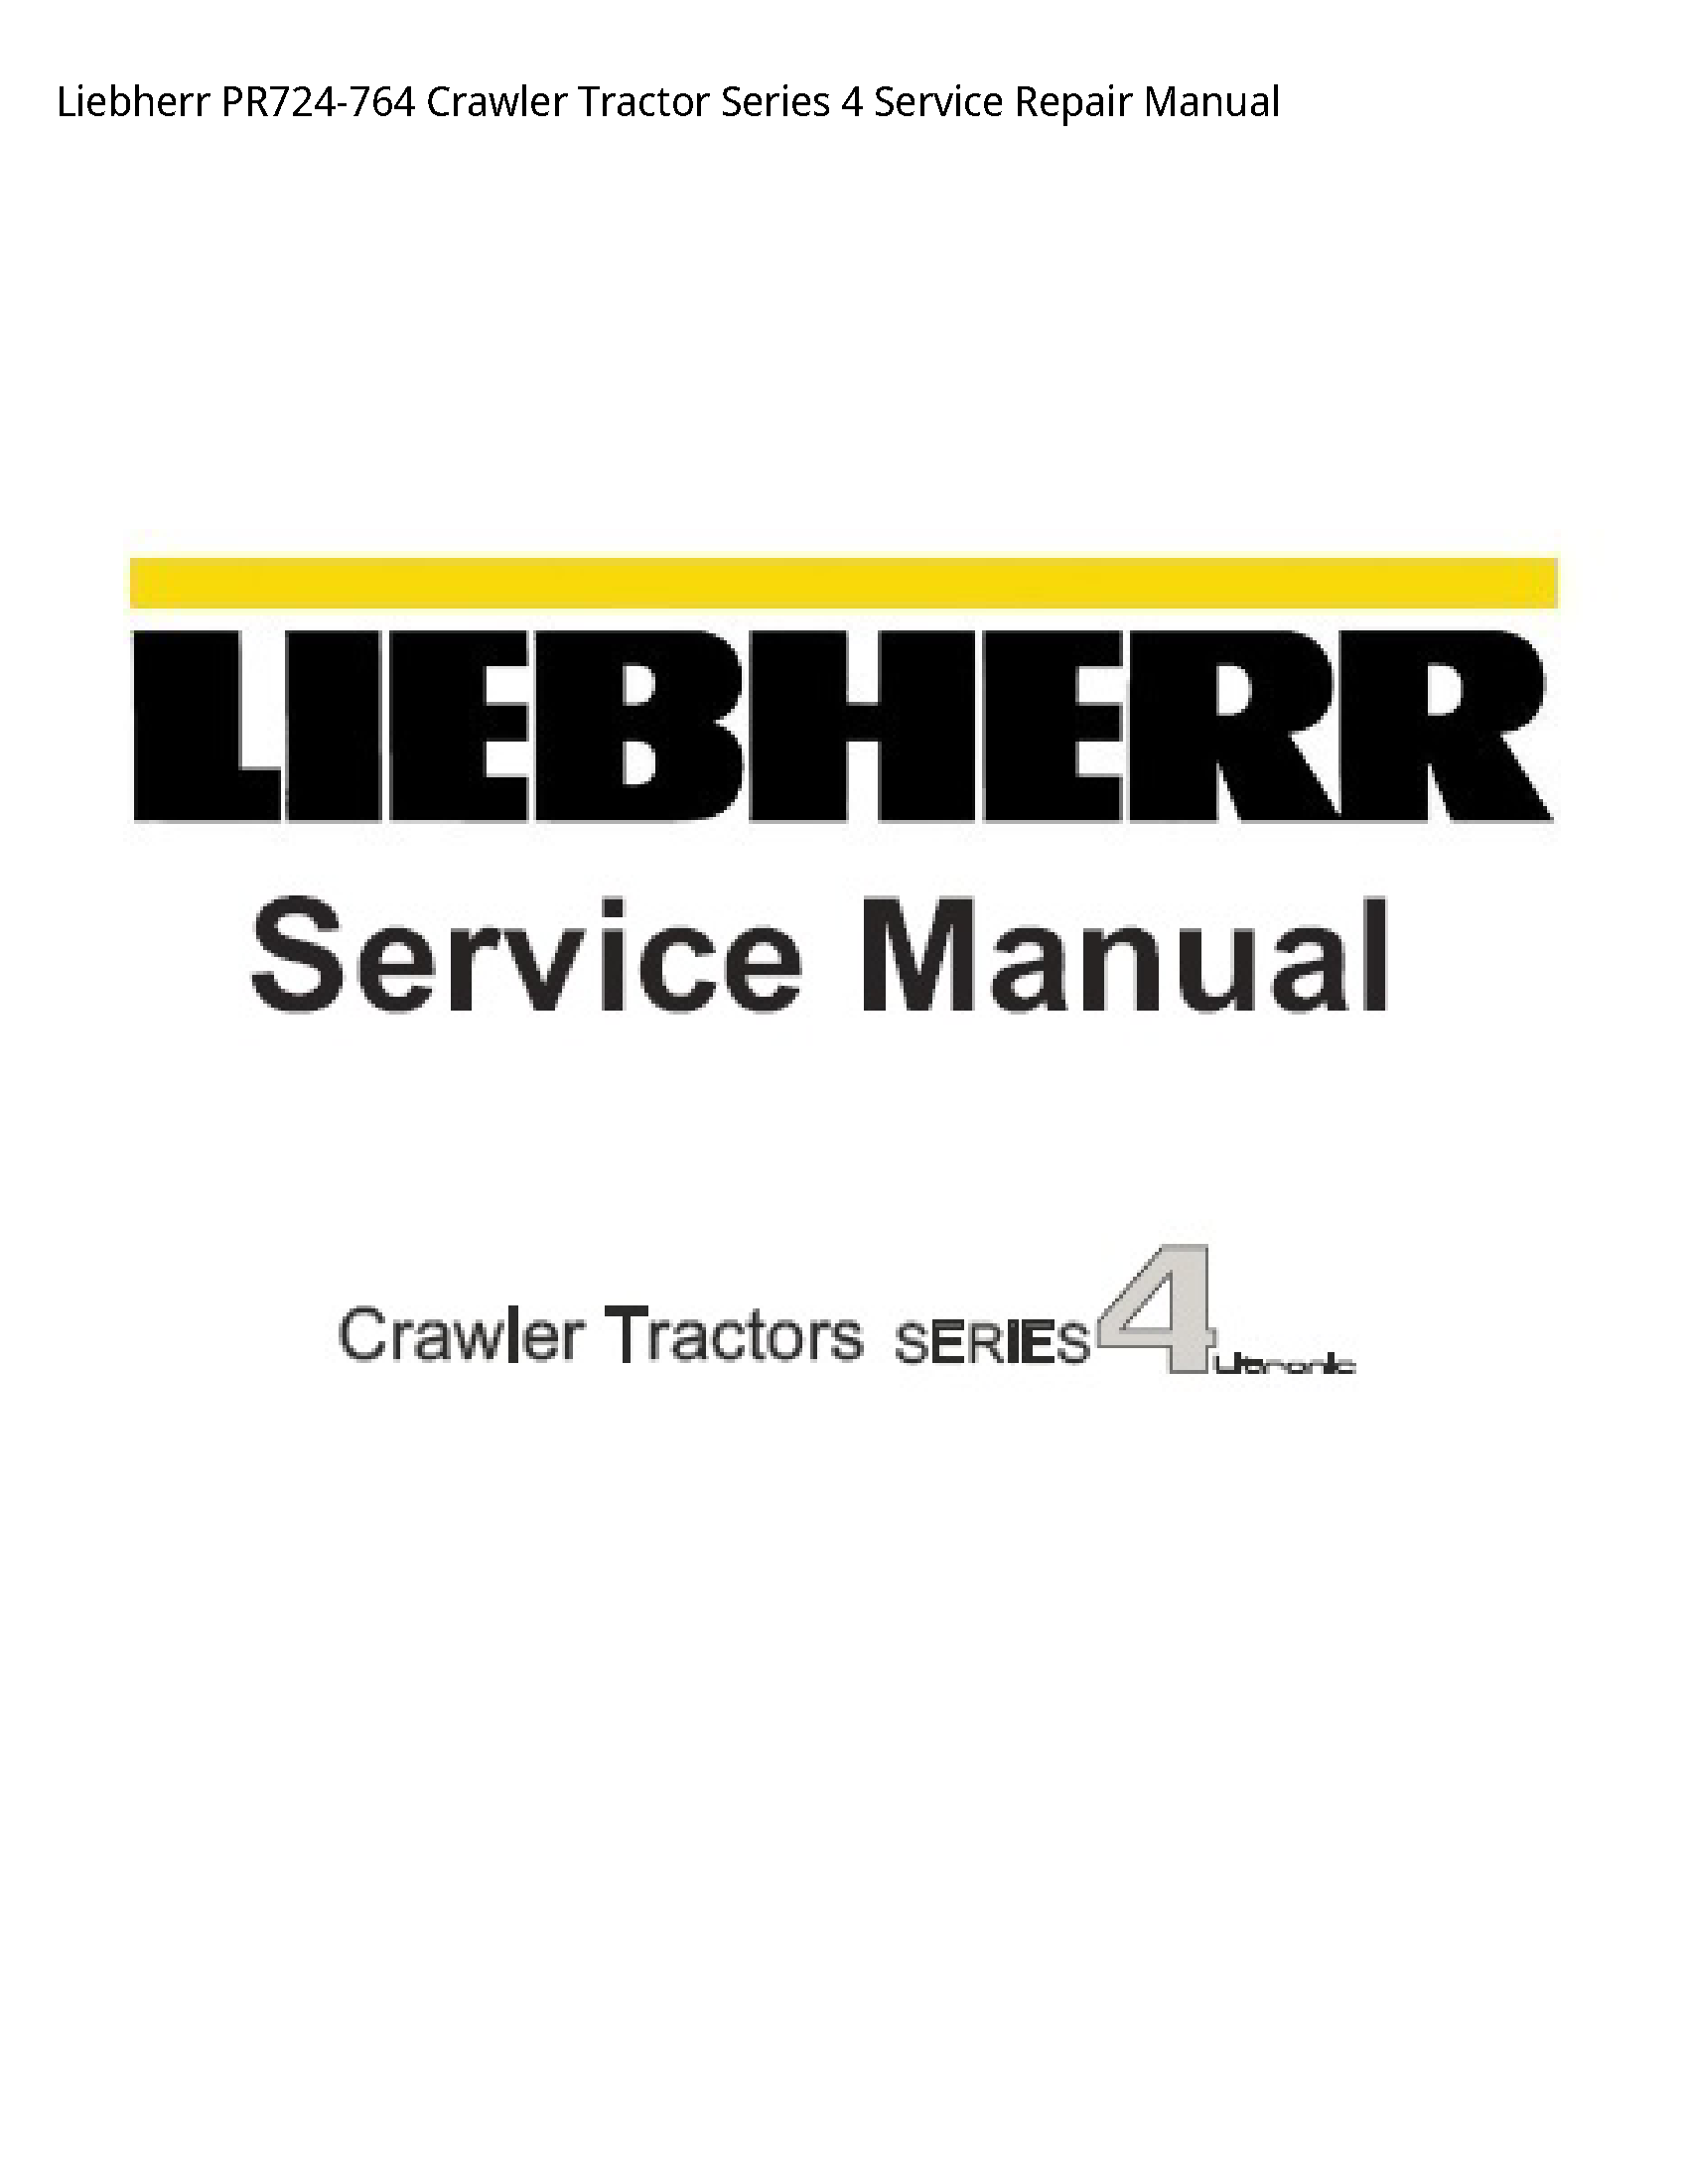 Liebherr PR724-764 Crawler Tractor Series manual